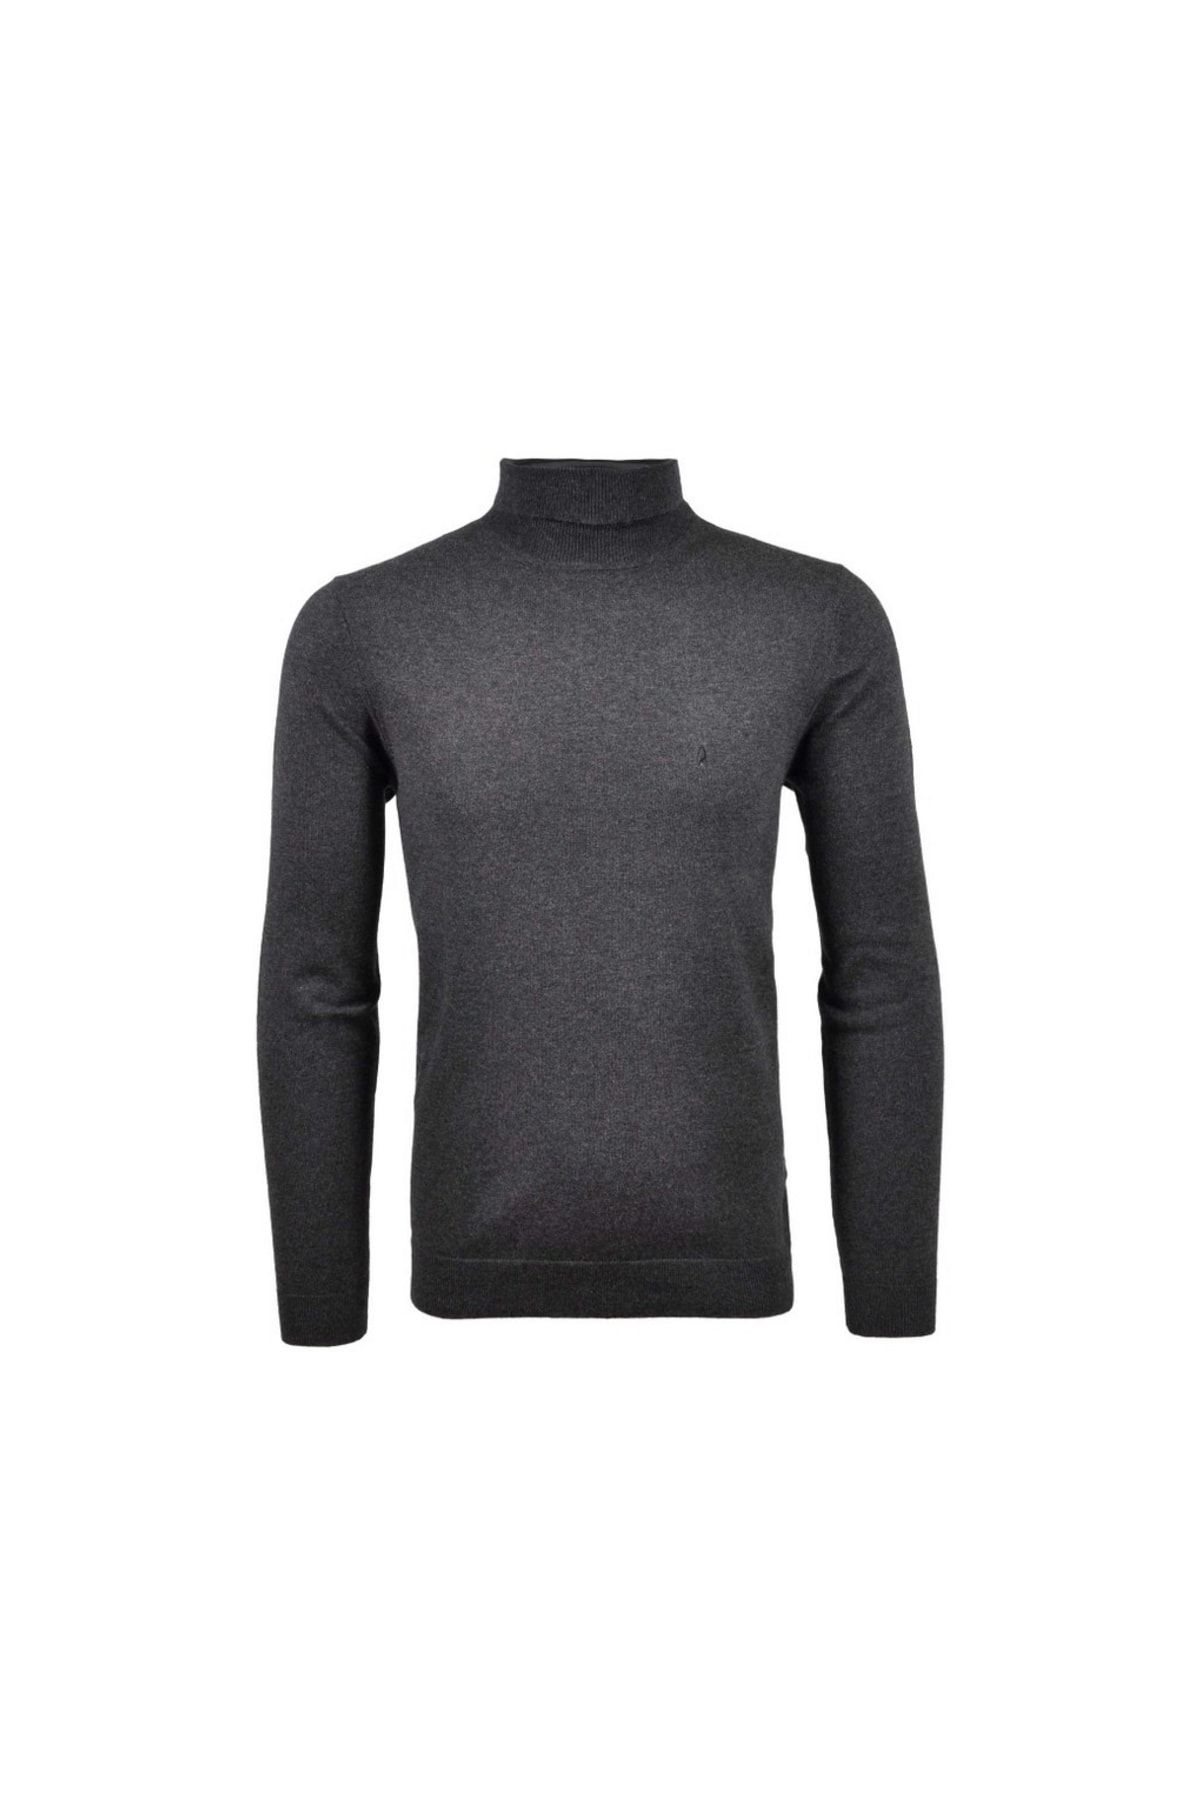 Trendyol Ragman Pullover - Fit - Grau Regular -